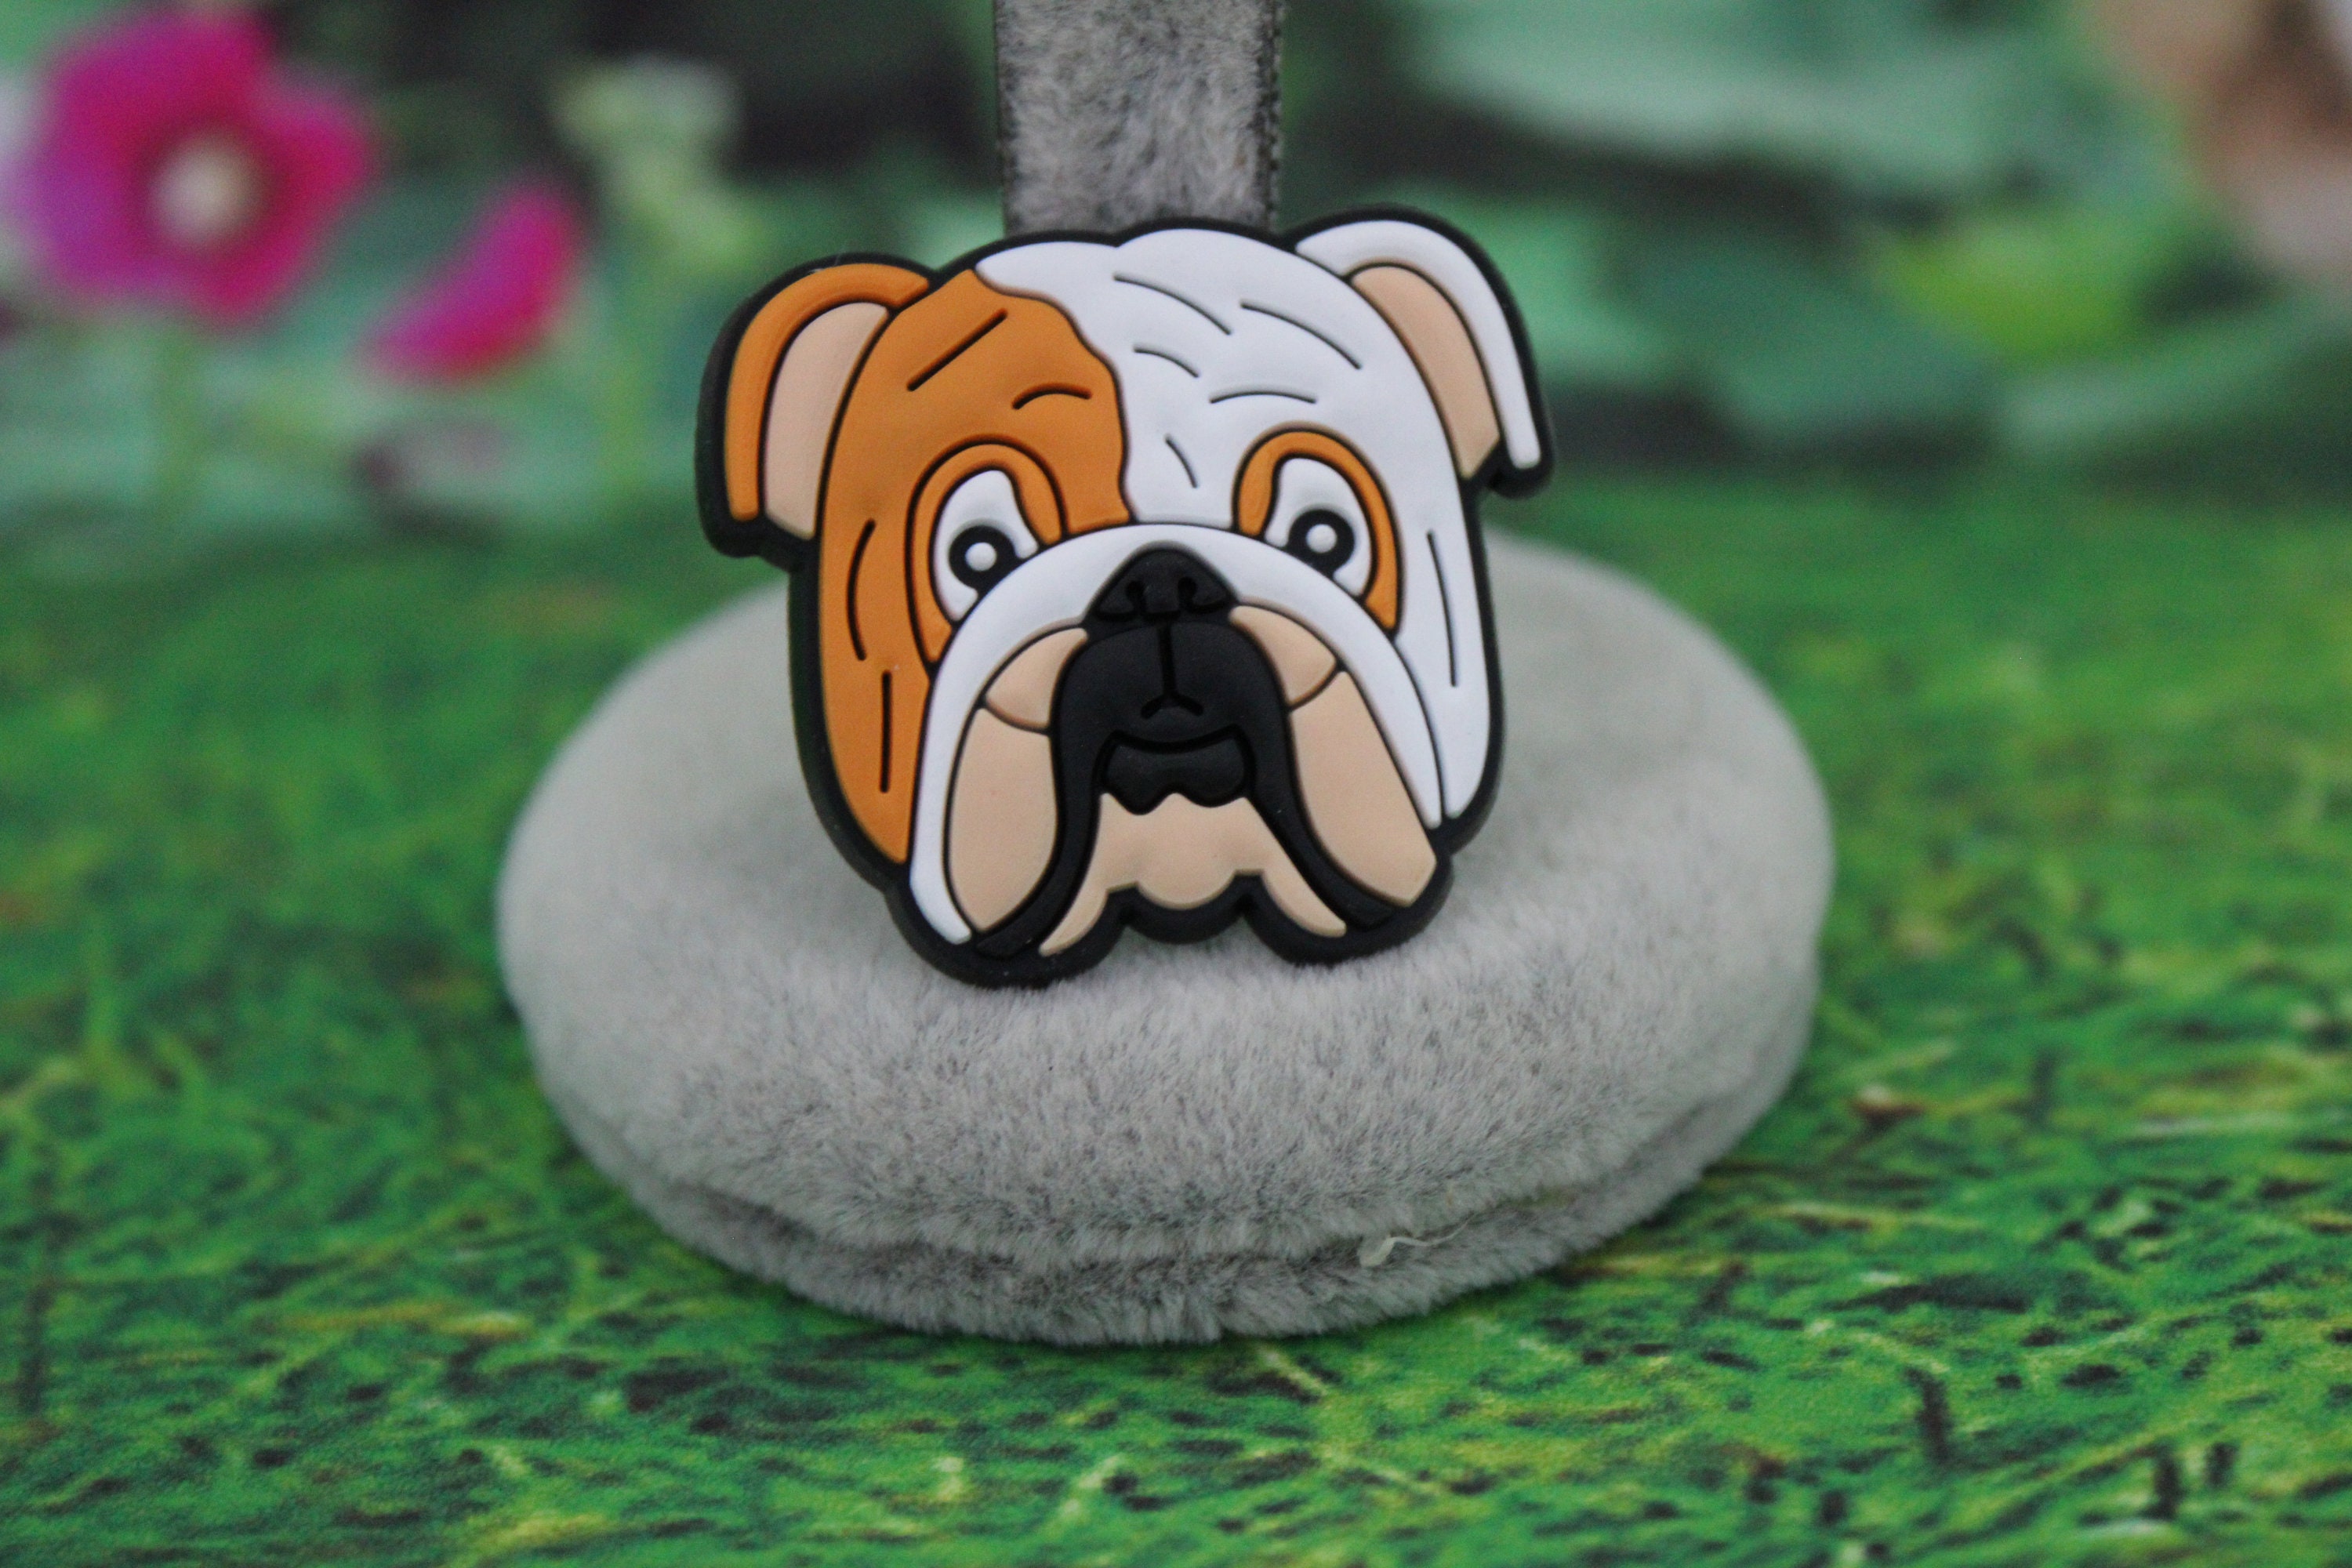 French Bulldog Keychain Bag Charm In Reverse M0n0 Print for Sale